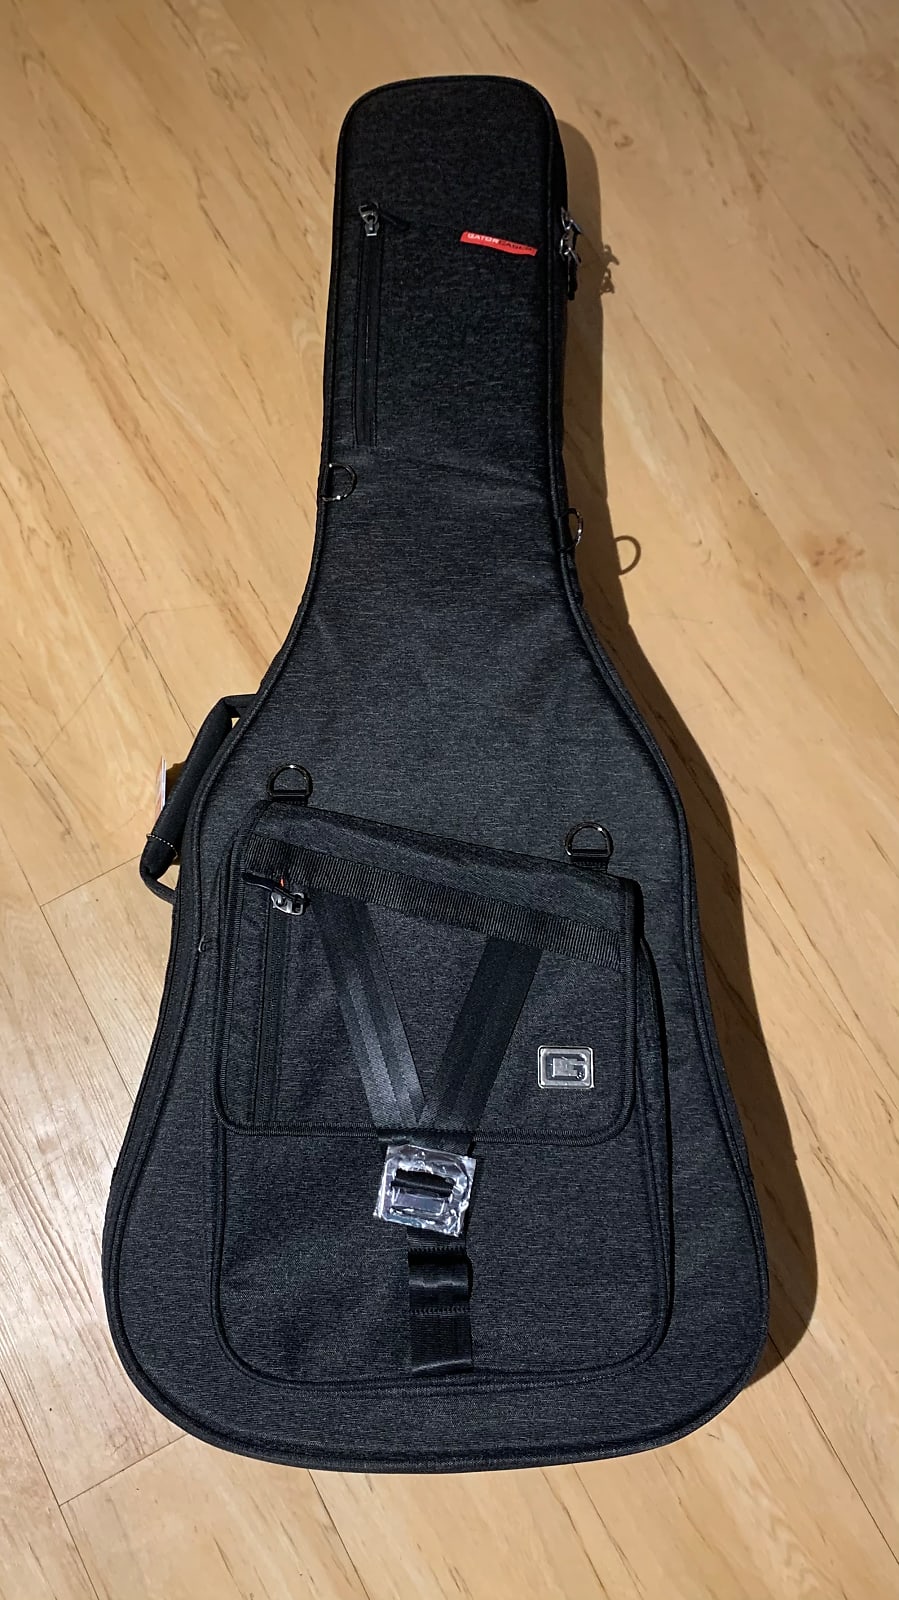 Gator Black Gt Bag For Resonator, 00 & Classical Guitars 2021 Black